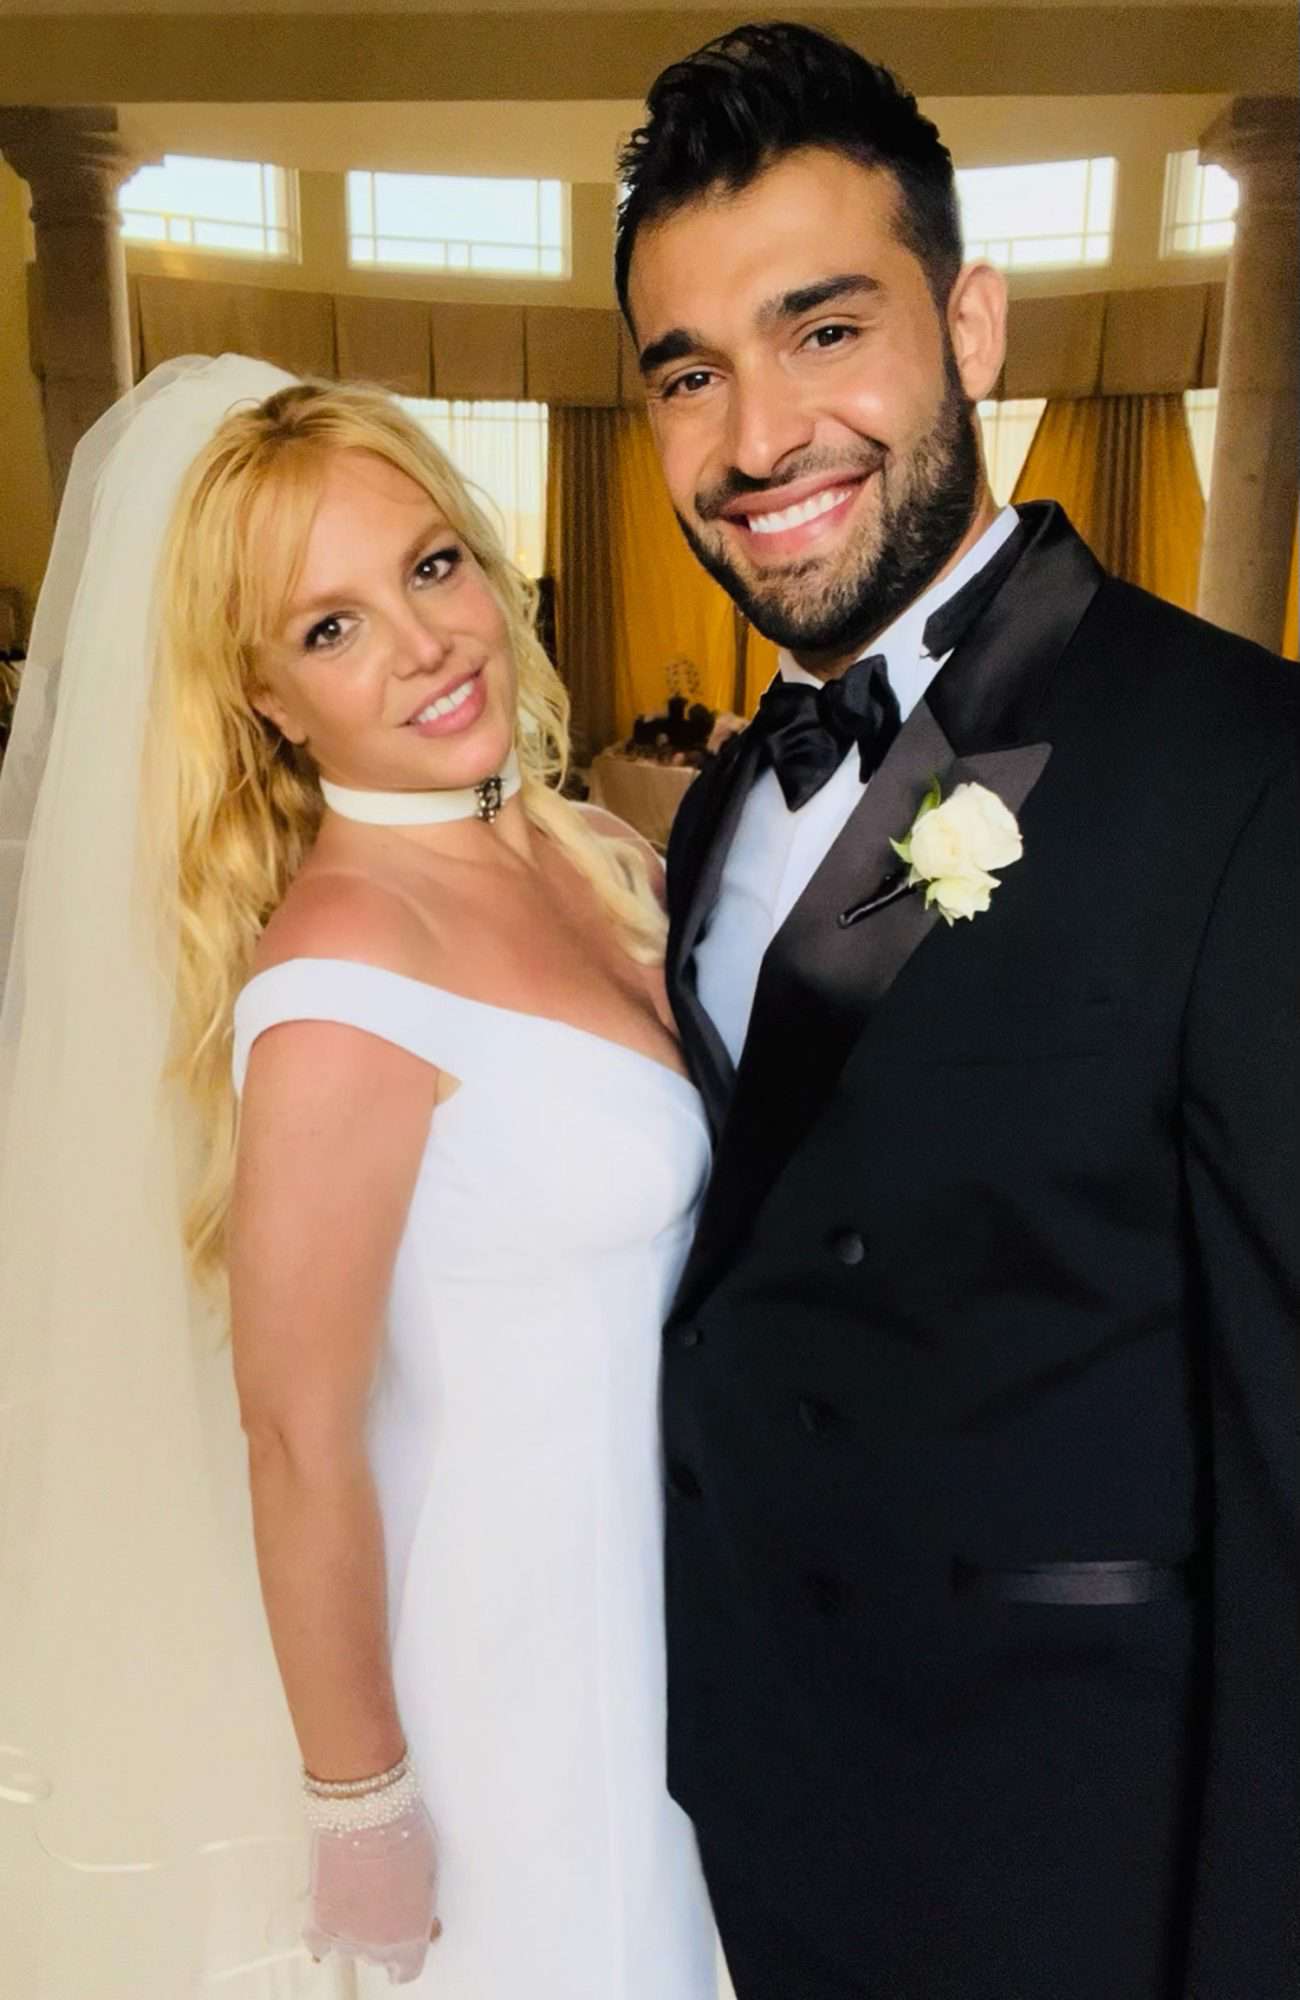 Britney Spears and Sam Asghari Share More Photos from Their Fairytale Wedding